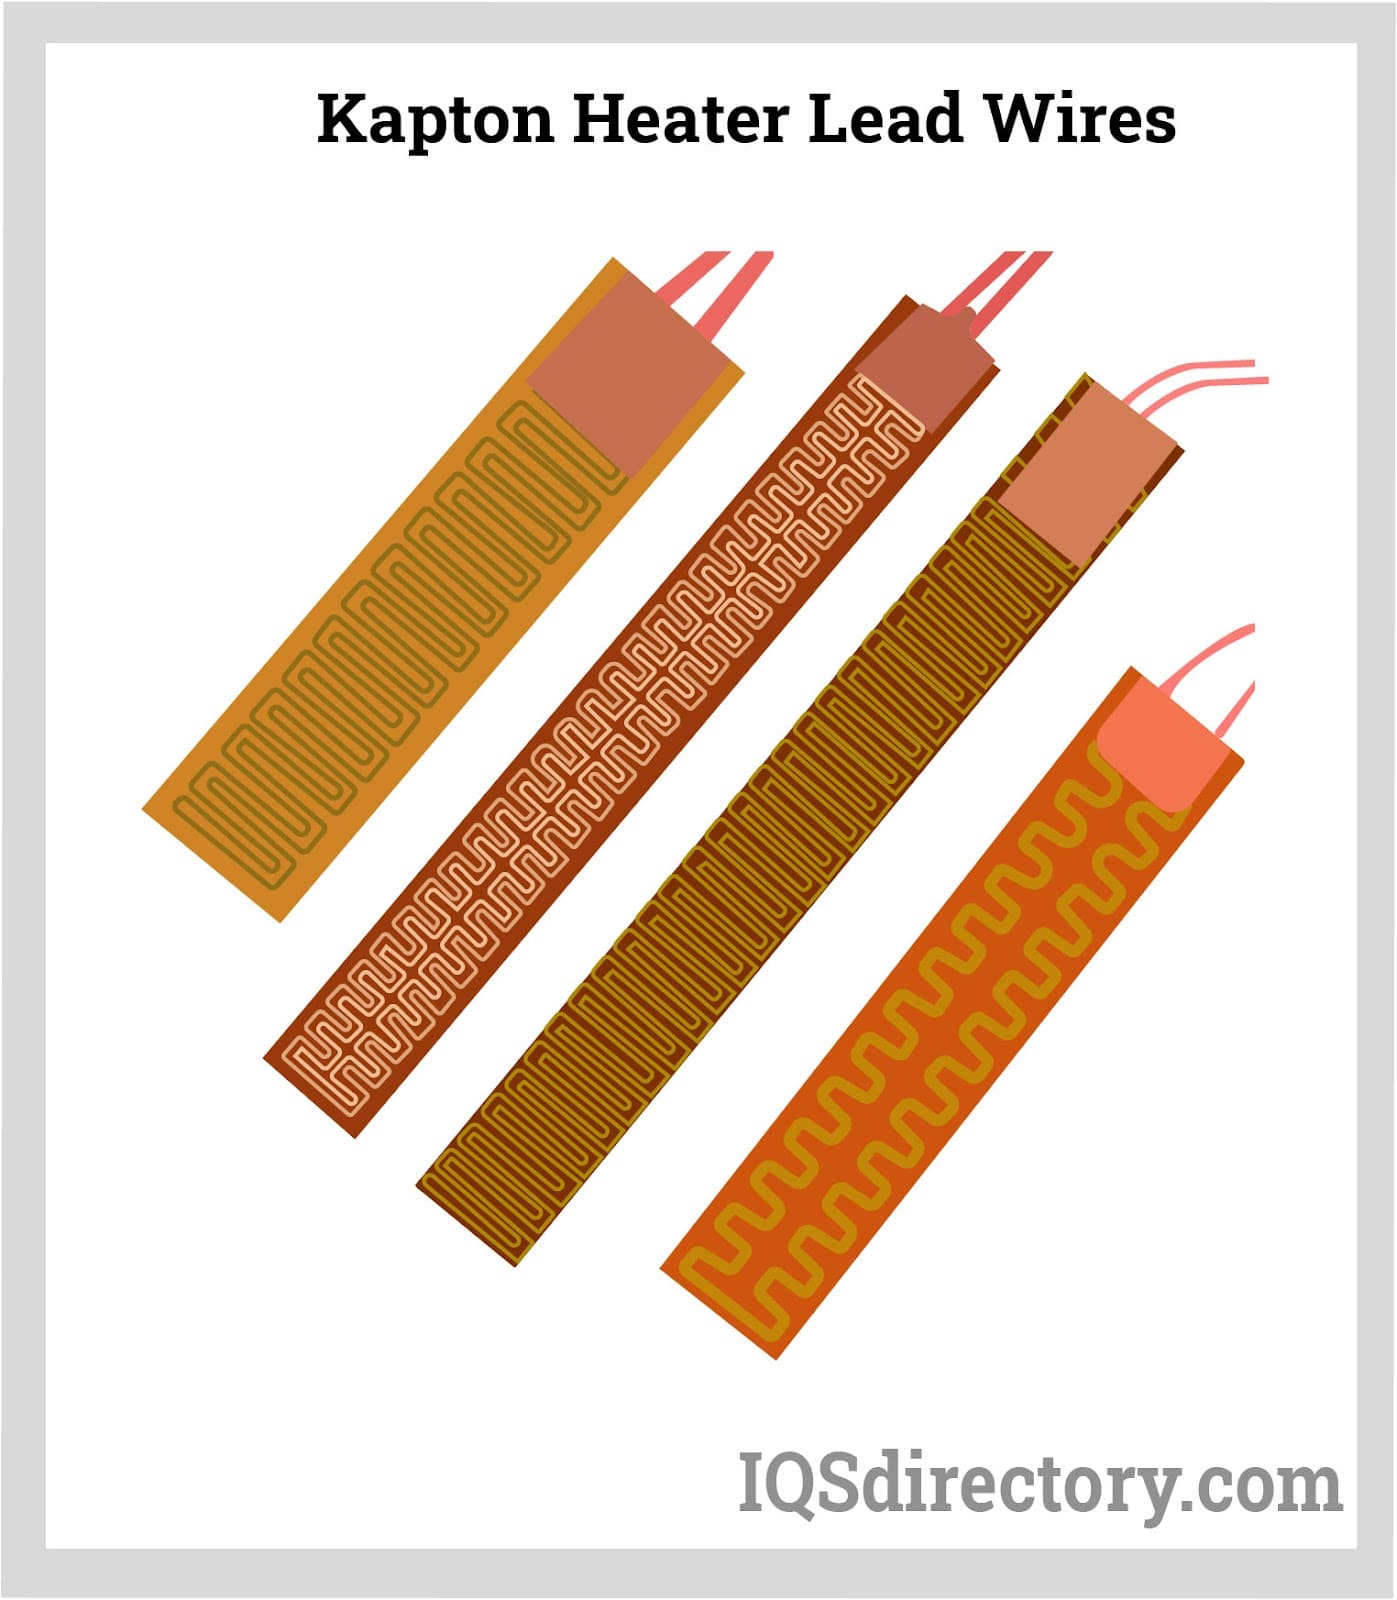 Kapton Heater Lead Wires